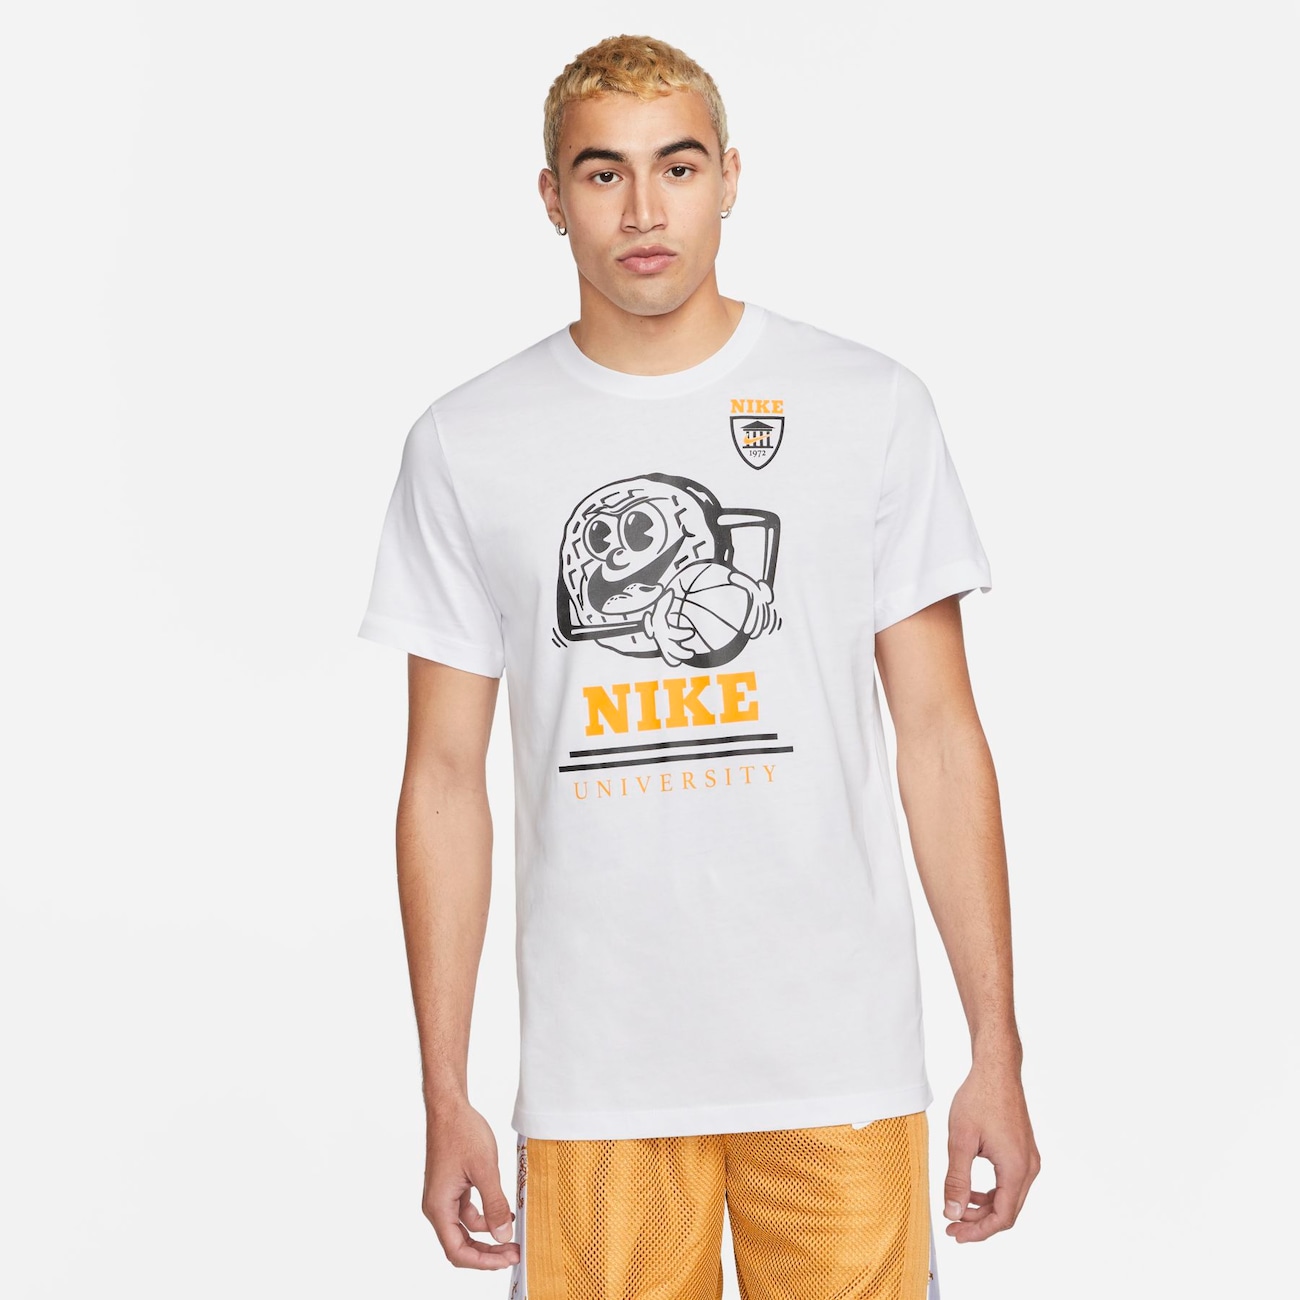 Camiseta Nike NIKEU Masculina